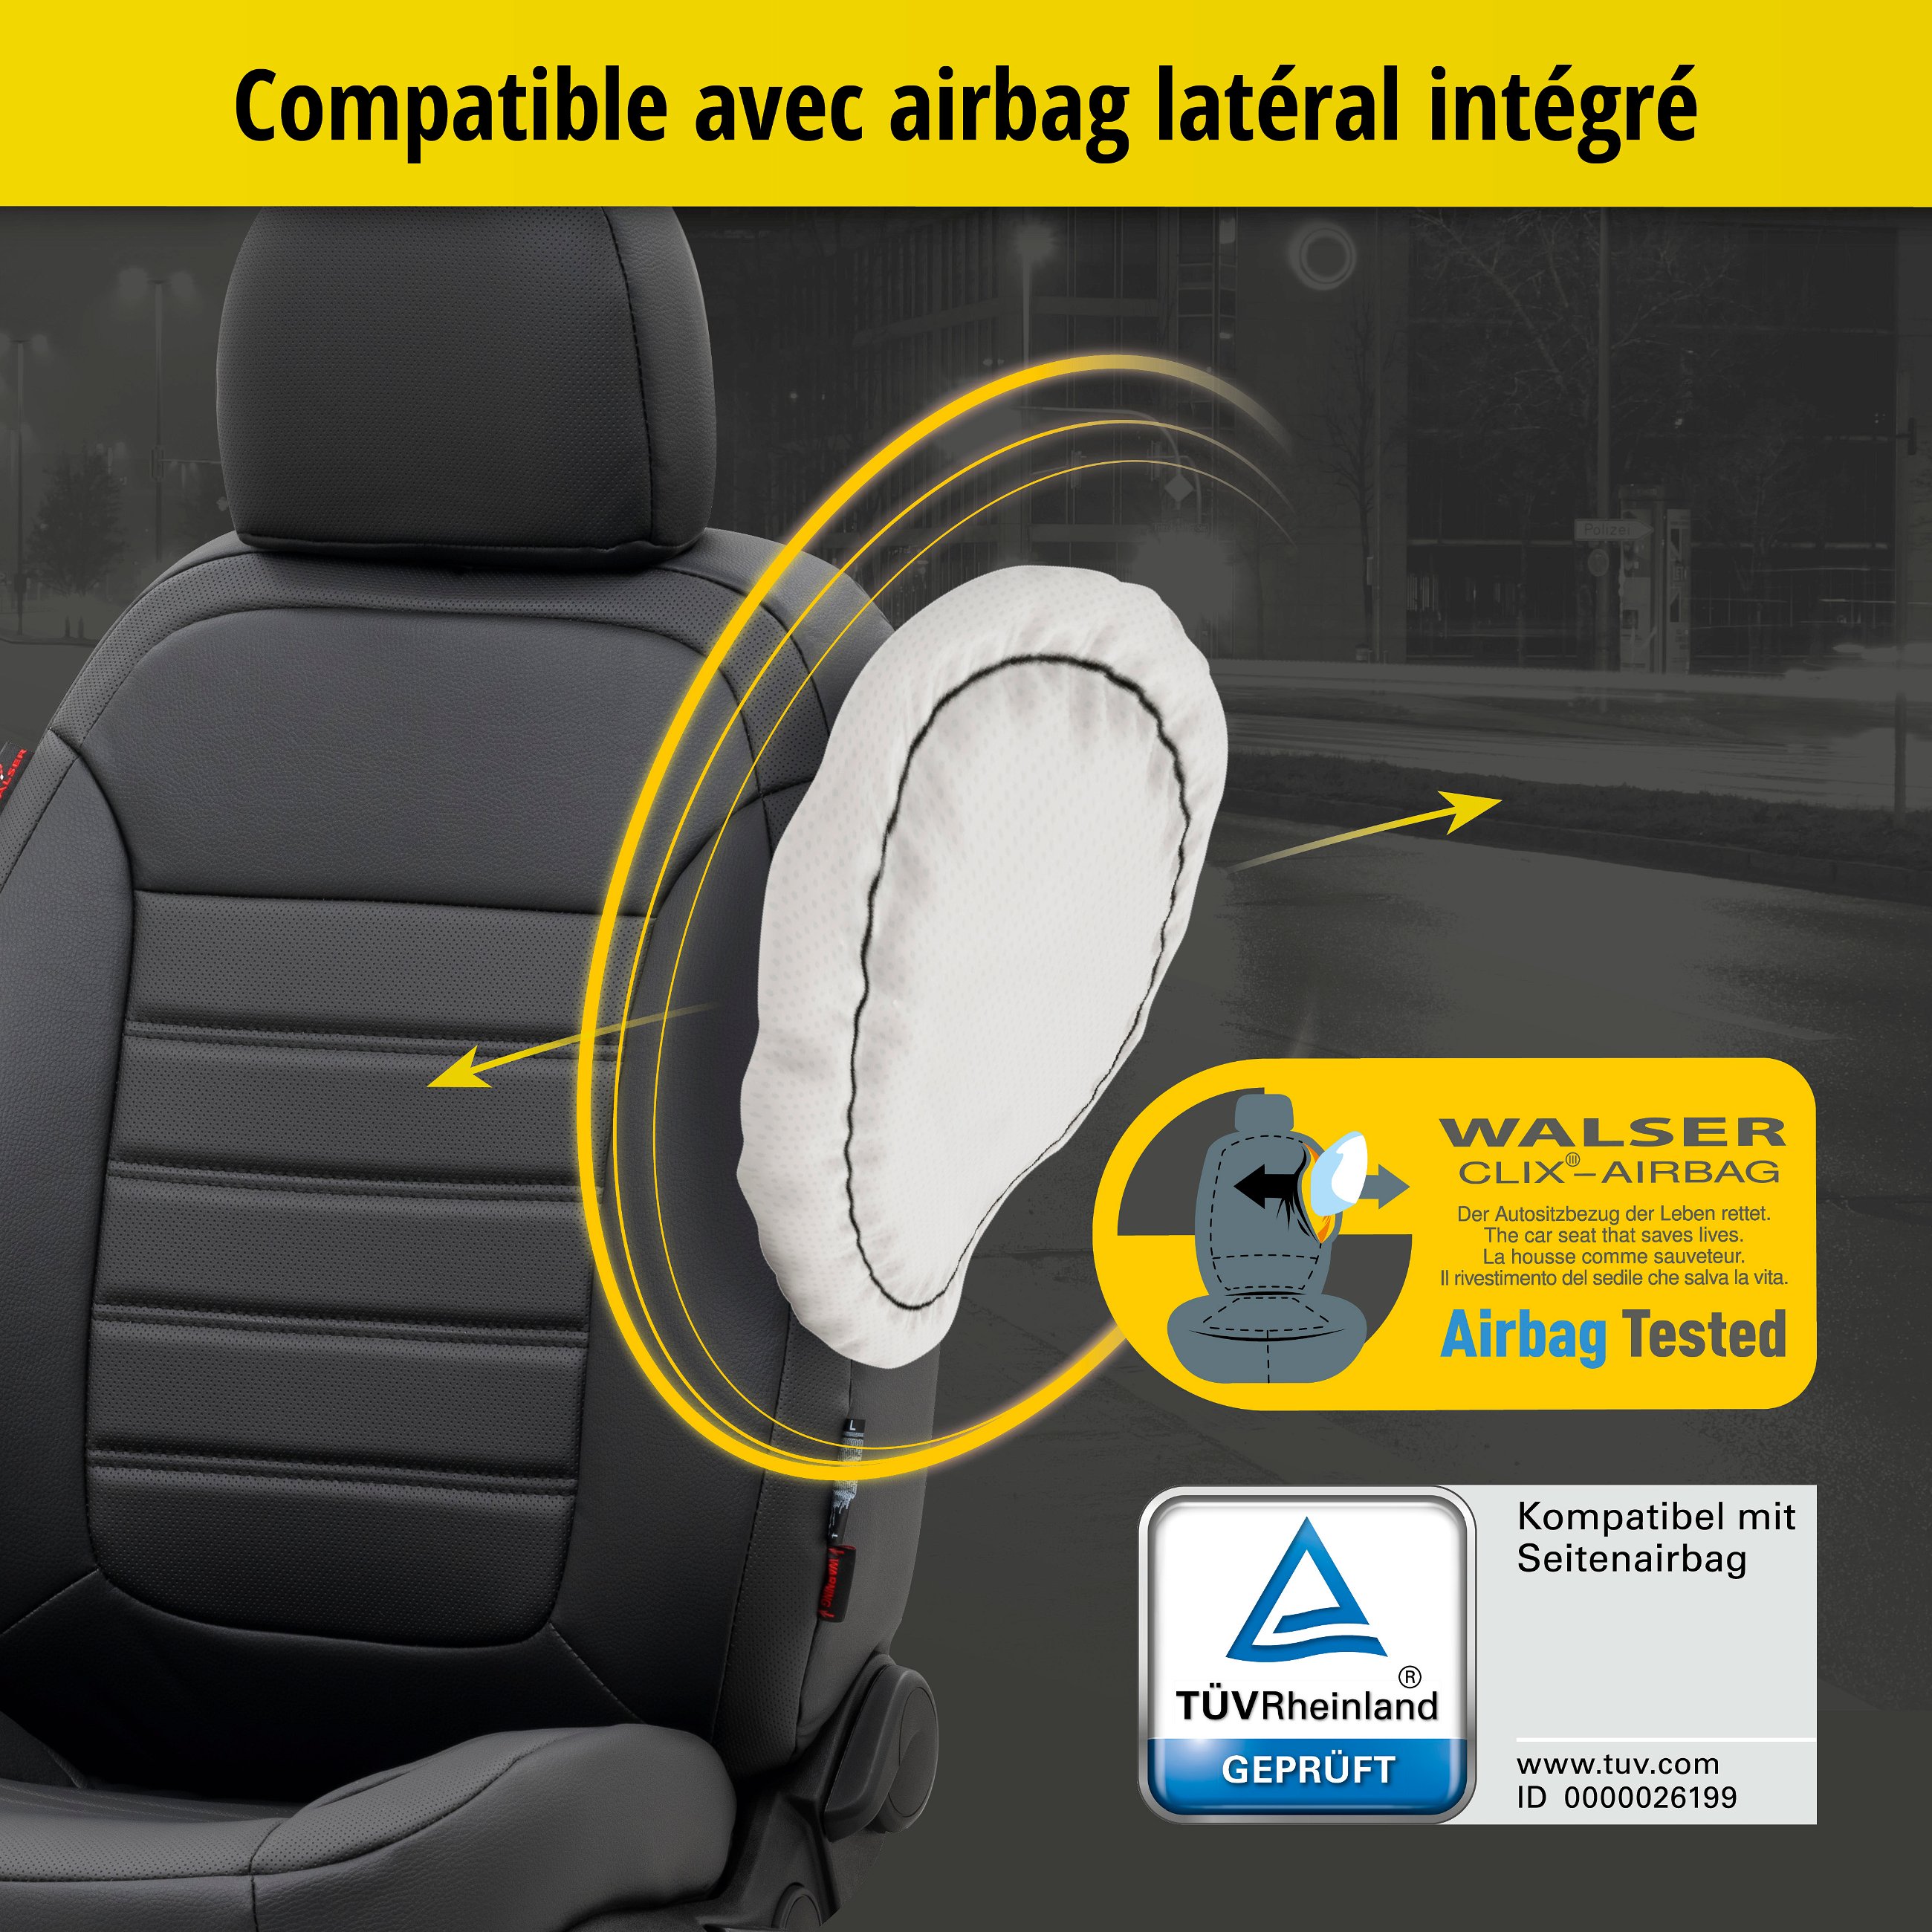 Housse de siège Robusto pour Opel Astra J Caravan (P10) 10/2010-10/2015, 2 housses de siège pour sièges normaux